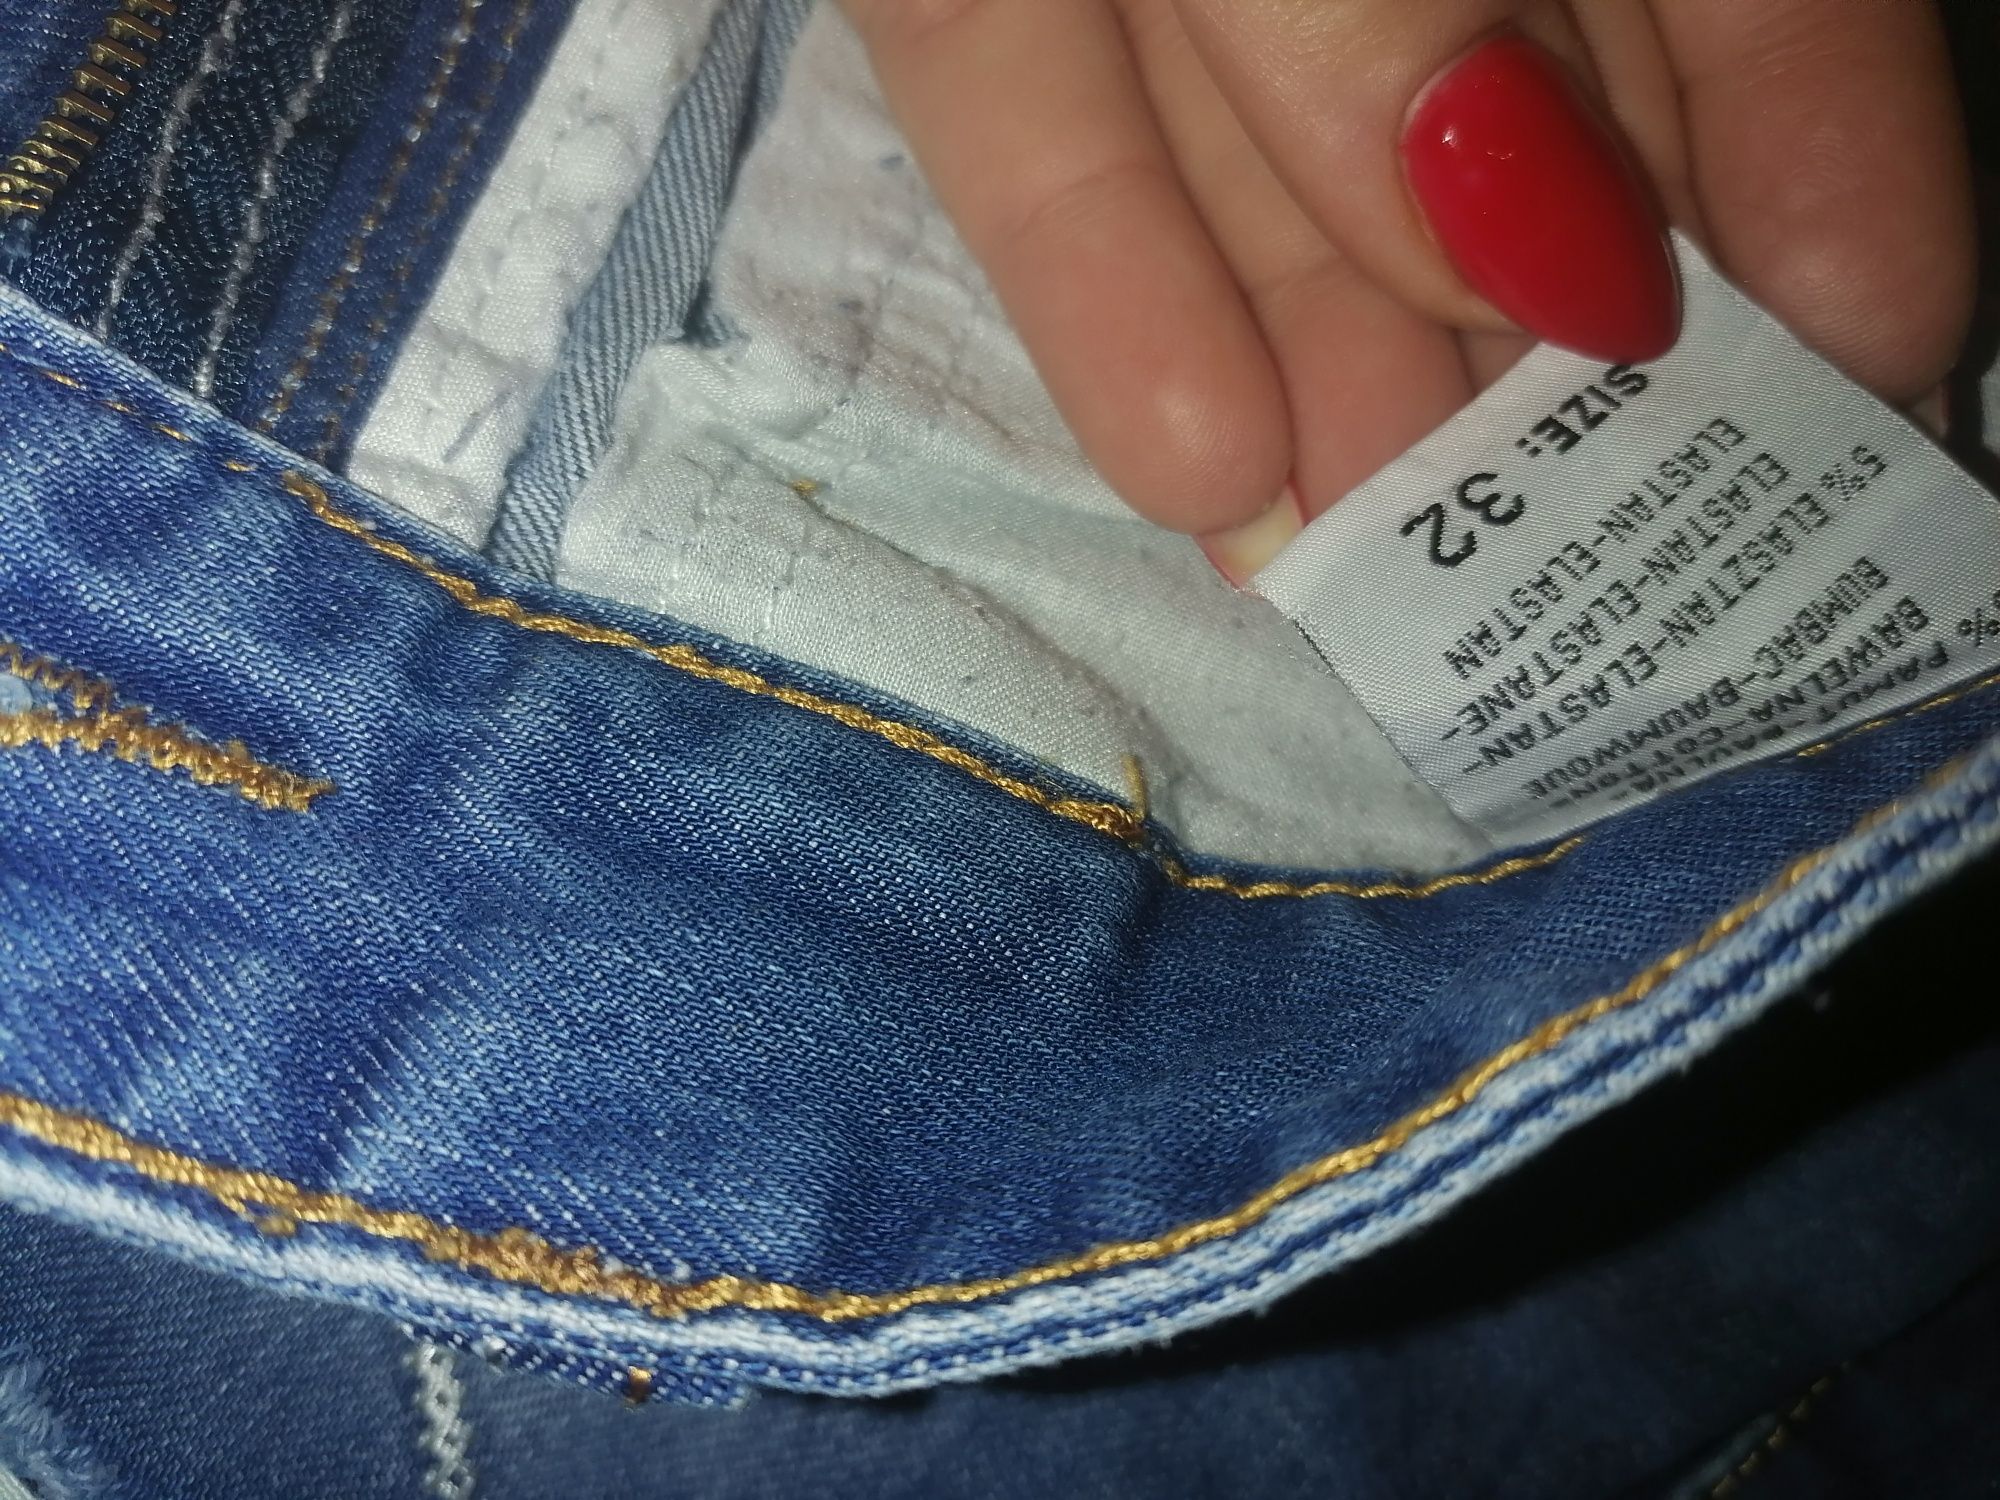 Spodnie jeansy z dziurami